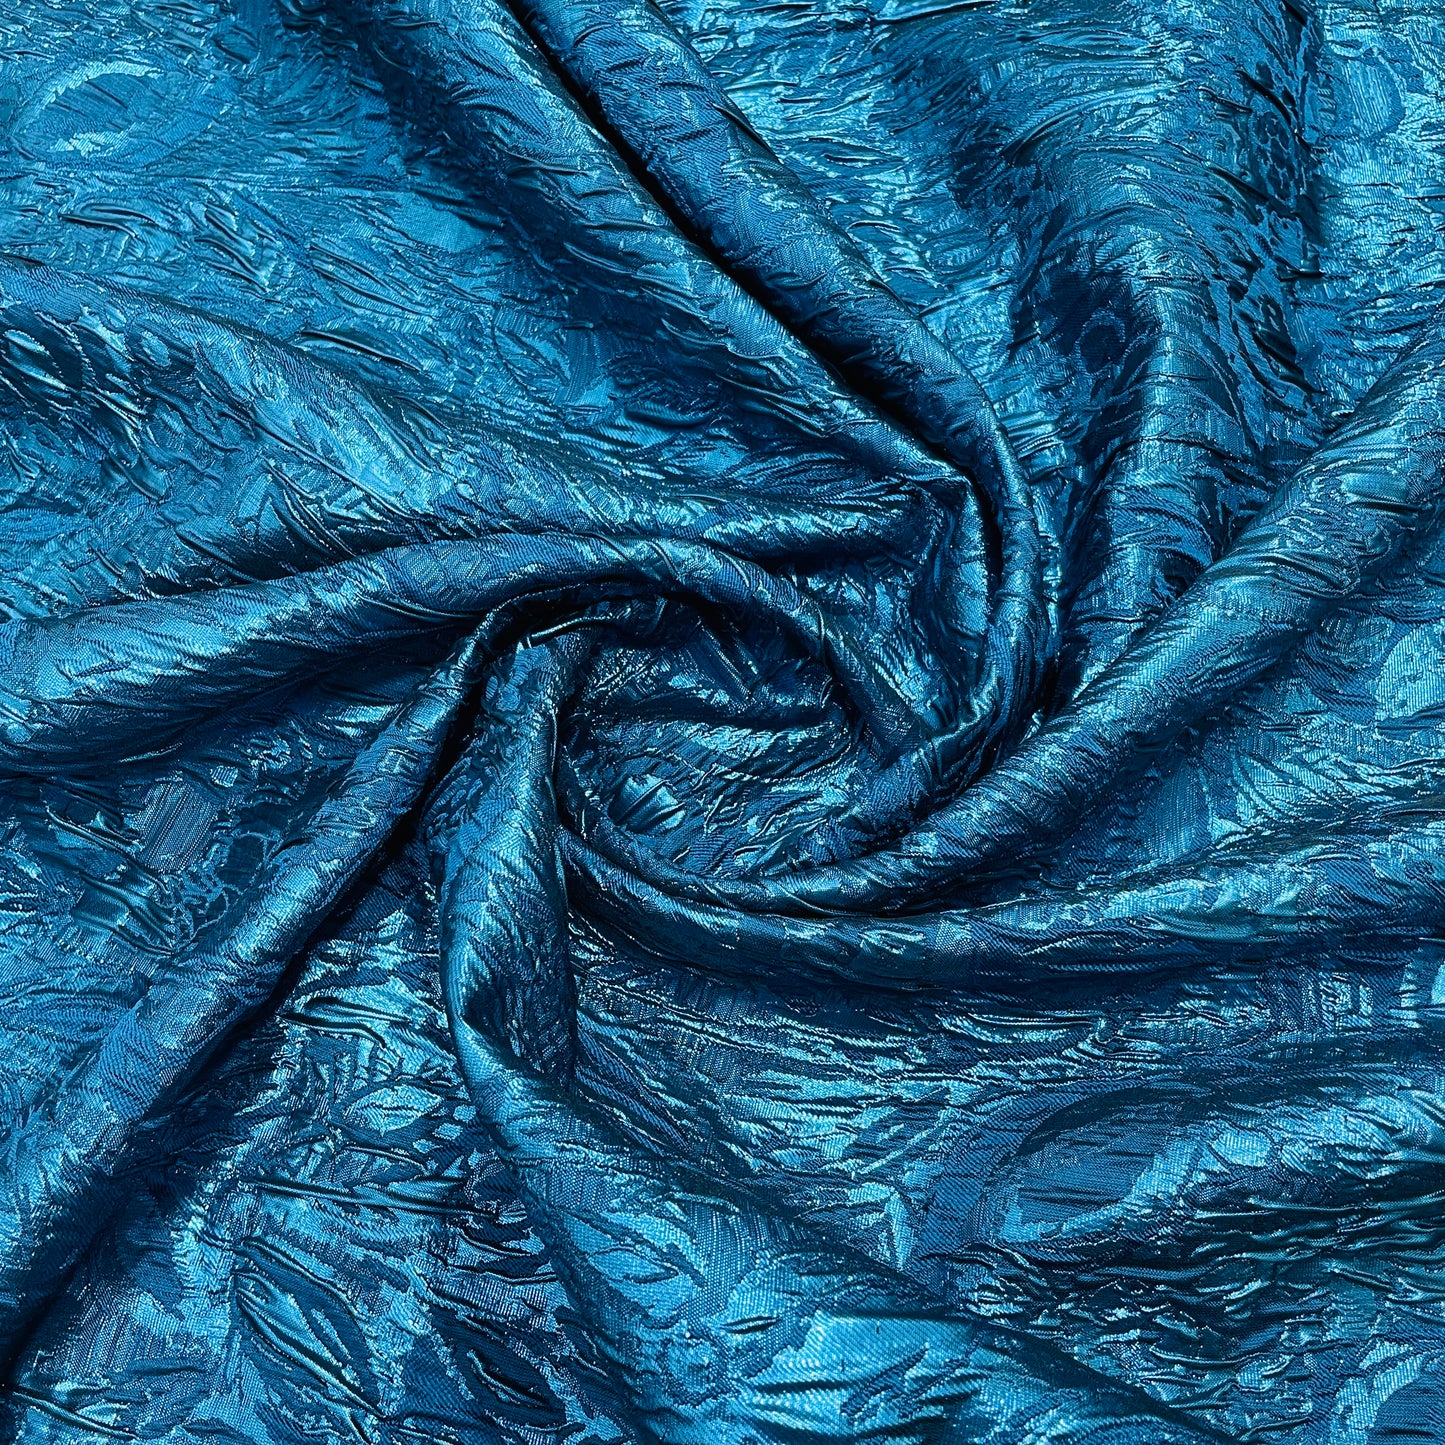 Teal Blue Floral Brocade Jacquard Fabric